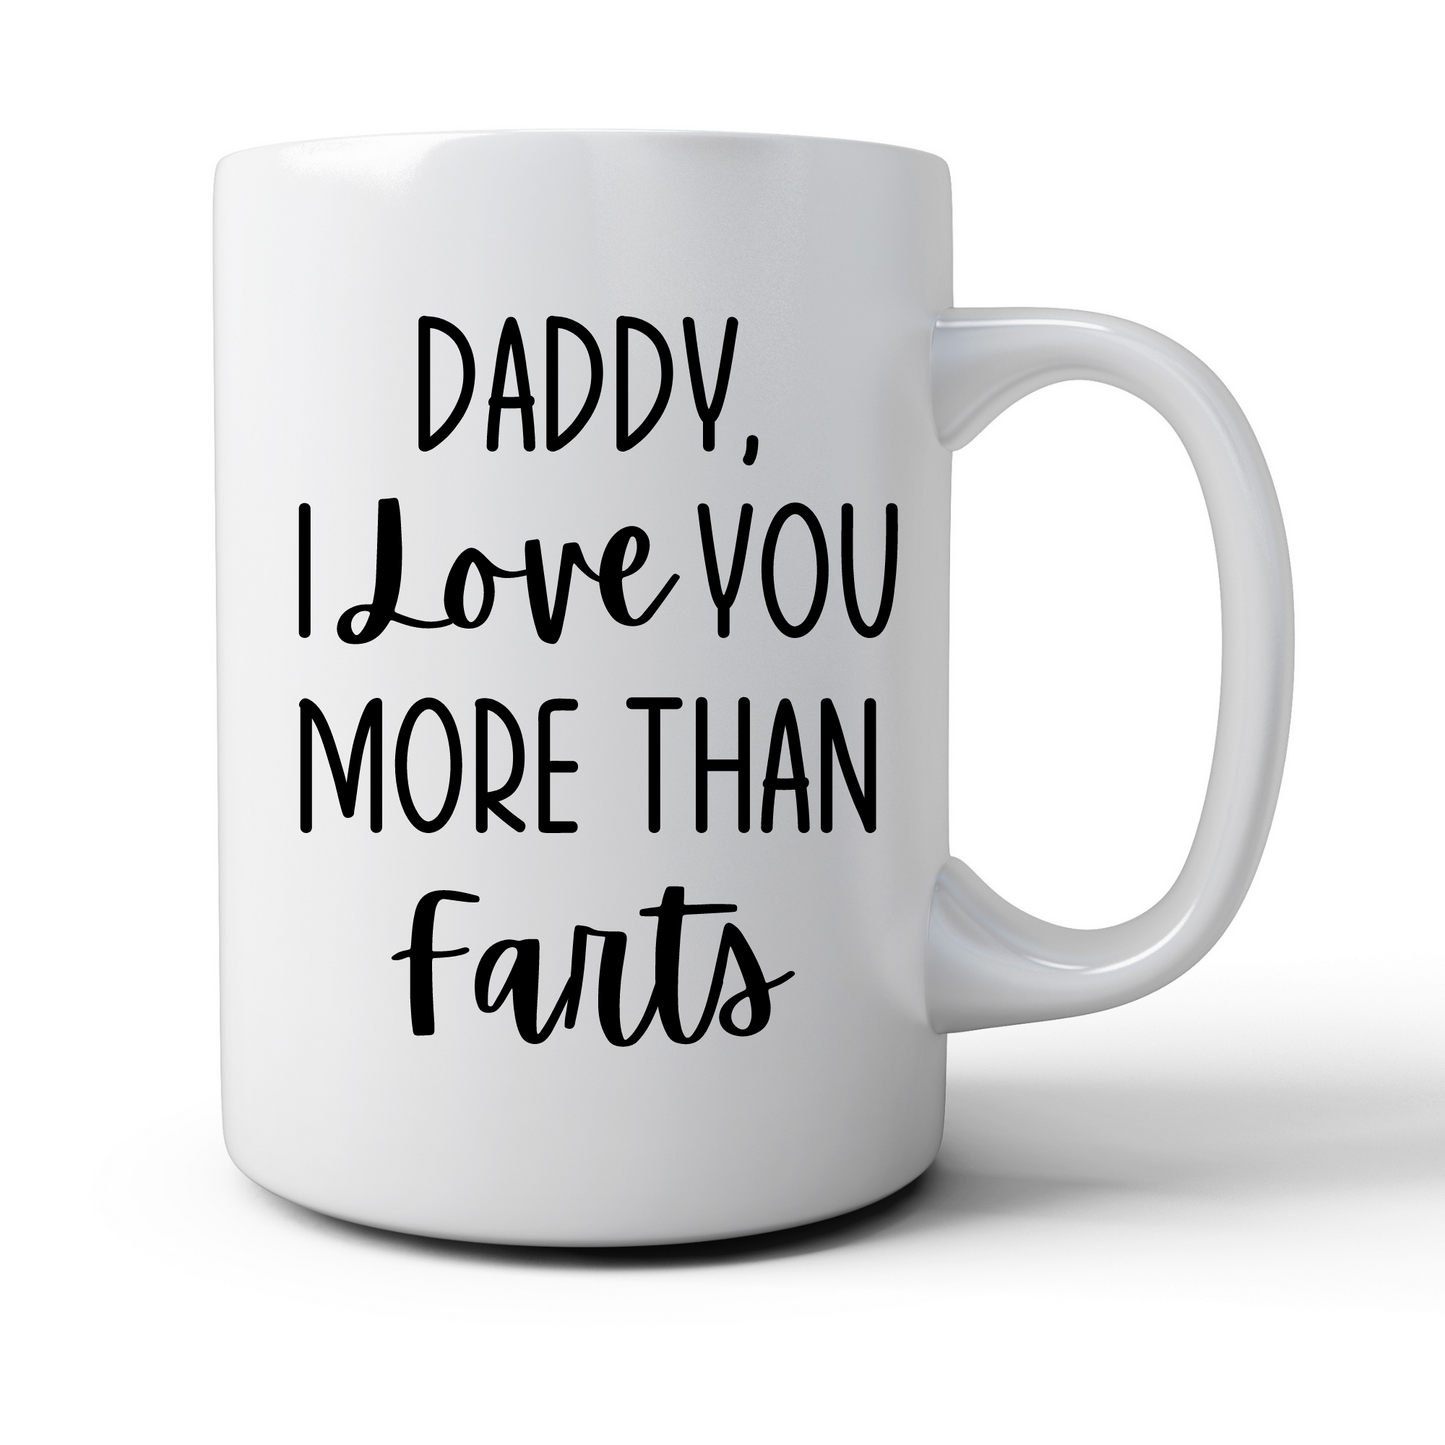 Daddy, I Love You More Than Farts Mug